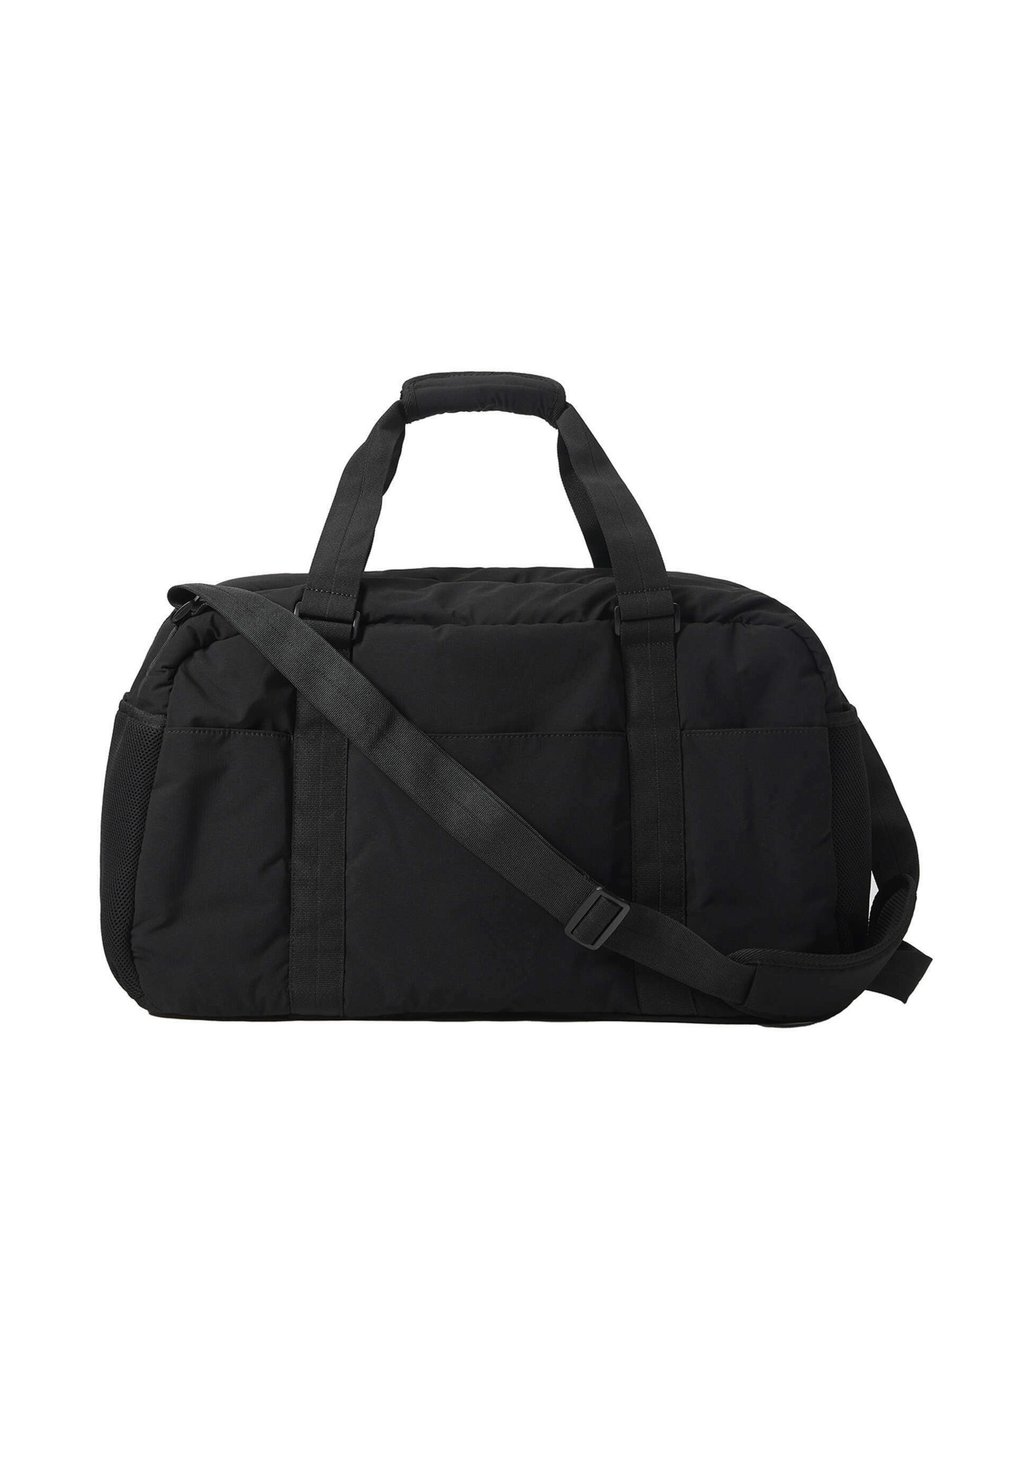 Дорожная сумка TRAVEL BAG OYSHO, цвет black цена и фото